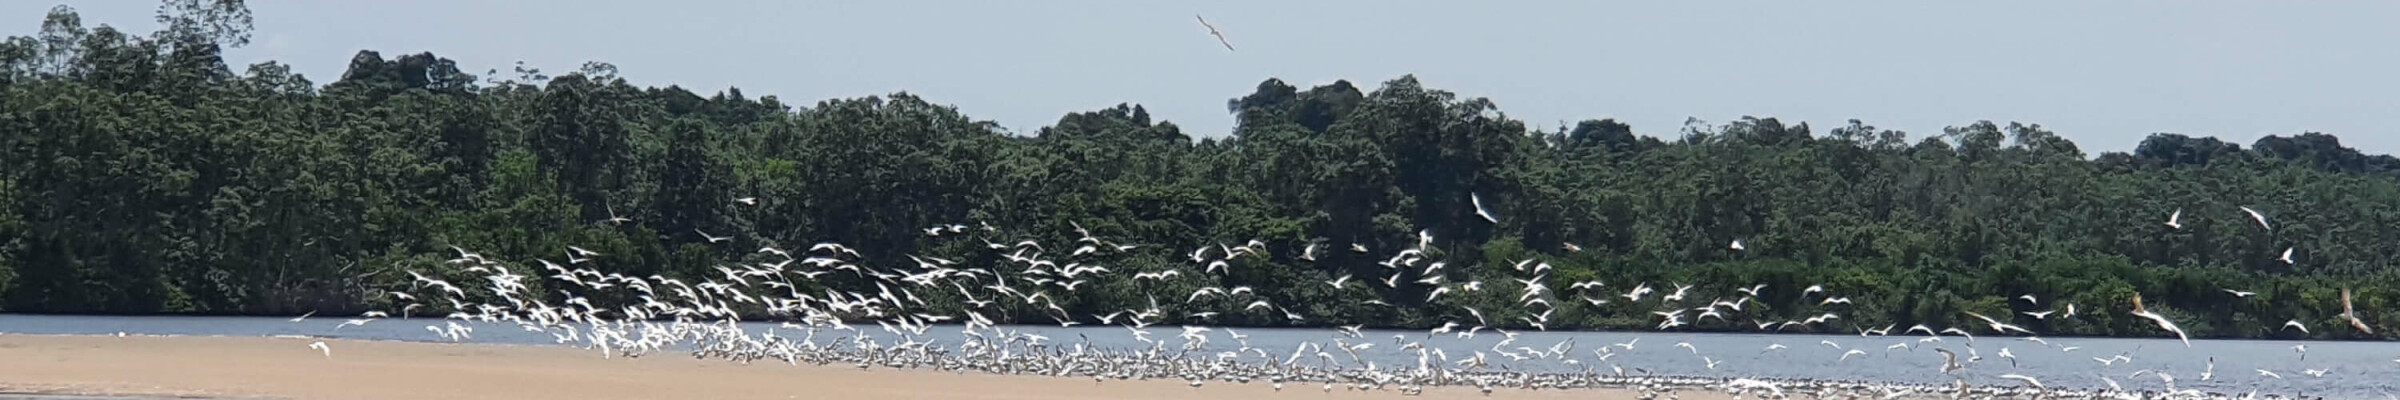 Faune sauvage oiseaux – Help Congo – Association Beauval Nature